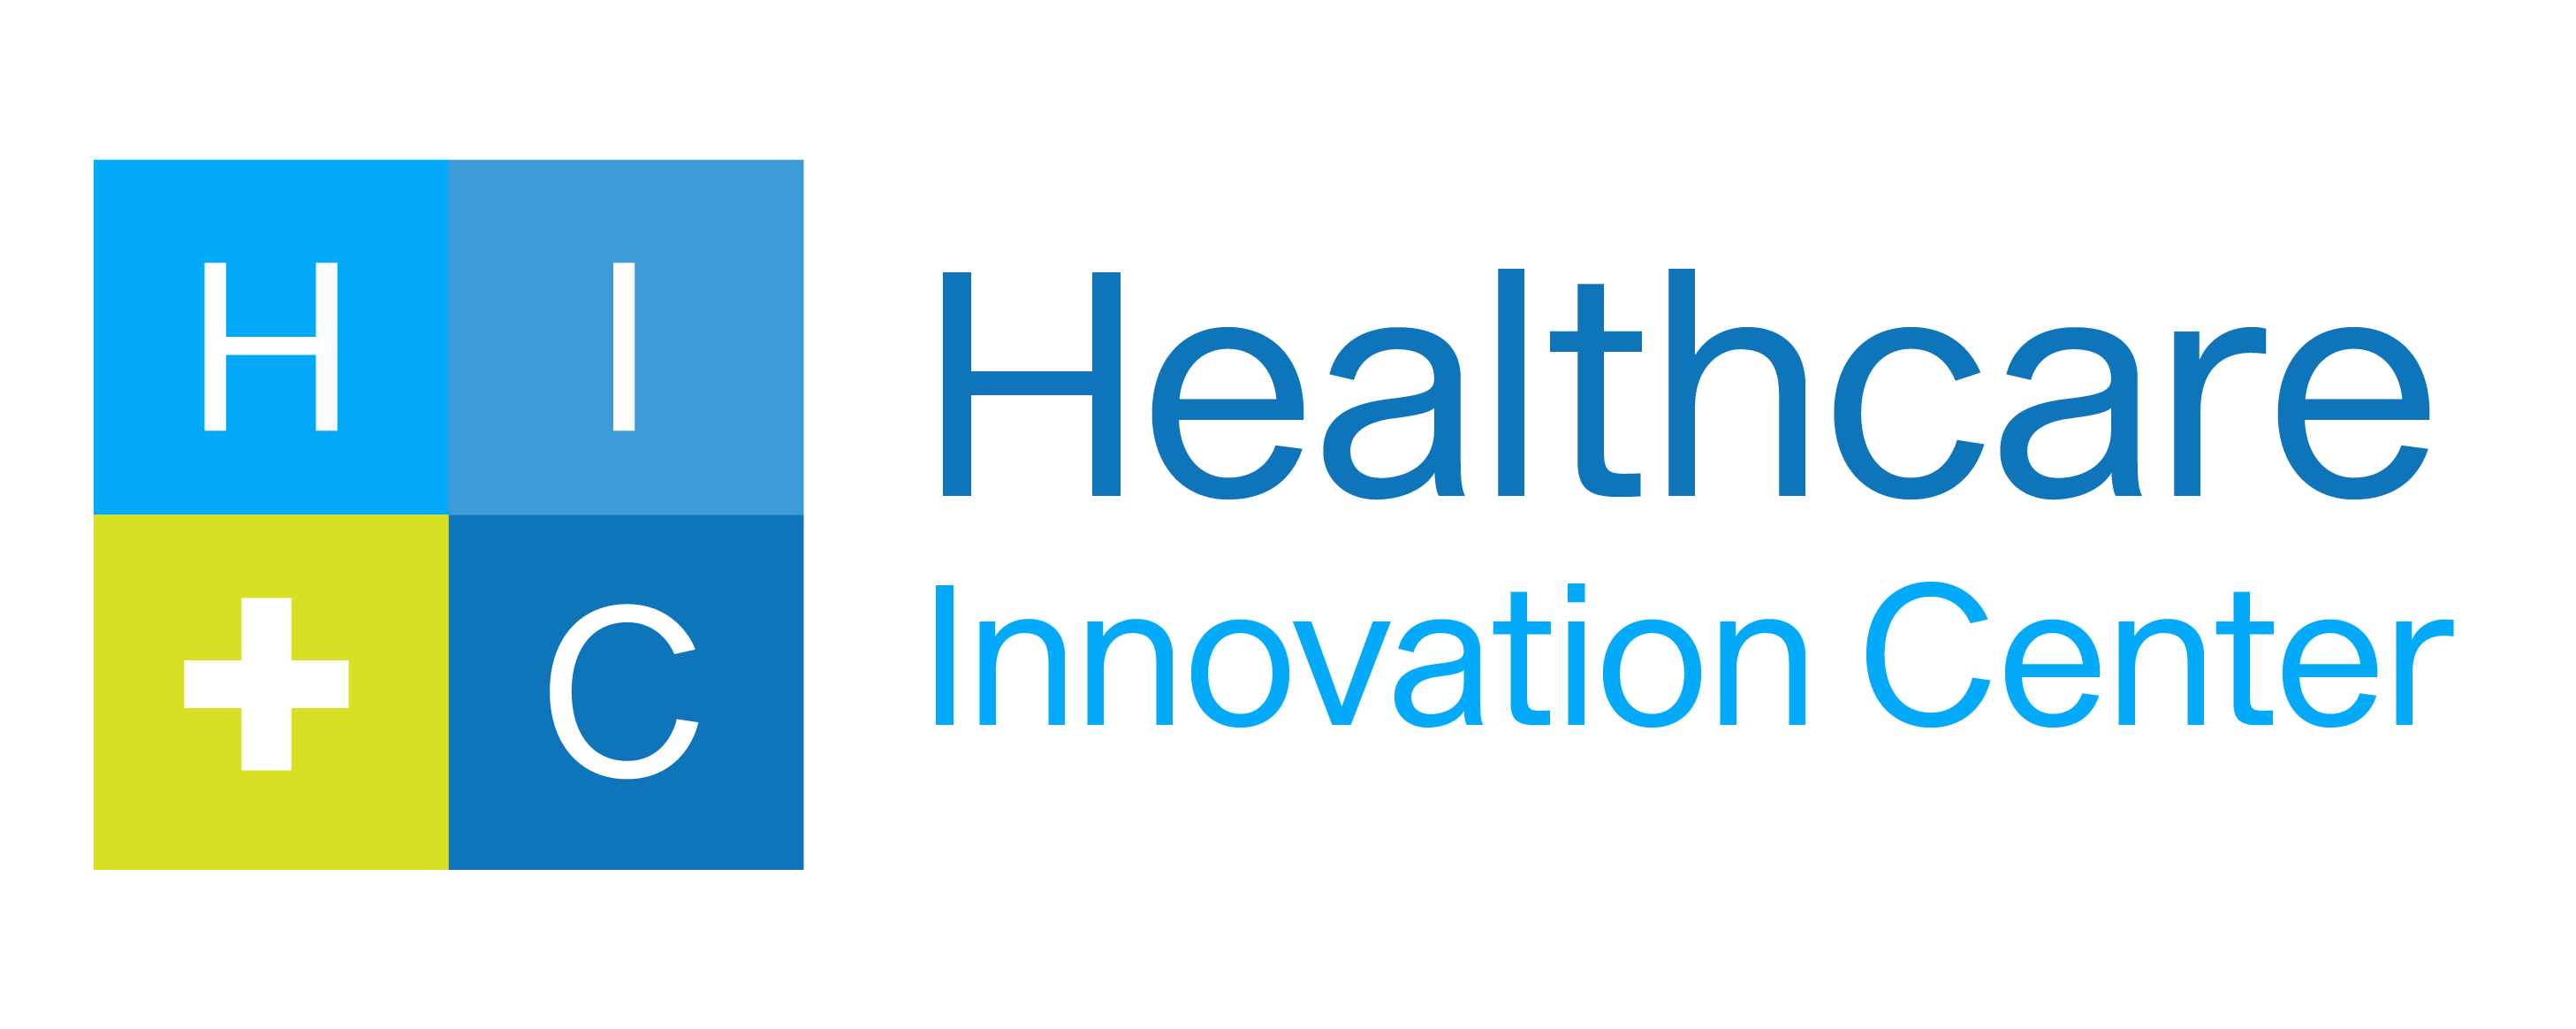 Healthcare Innovation Center